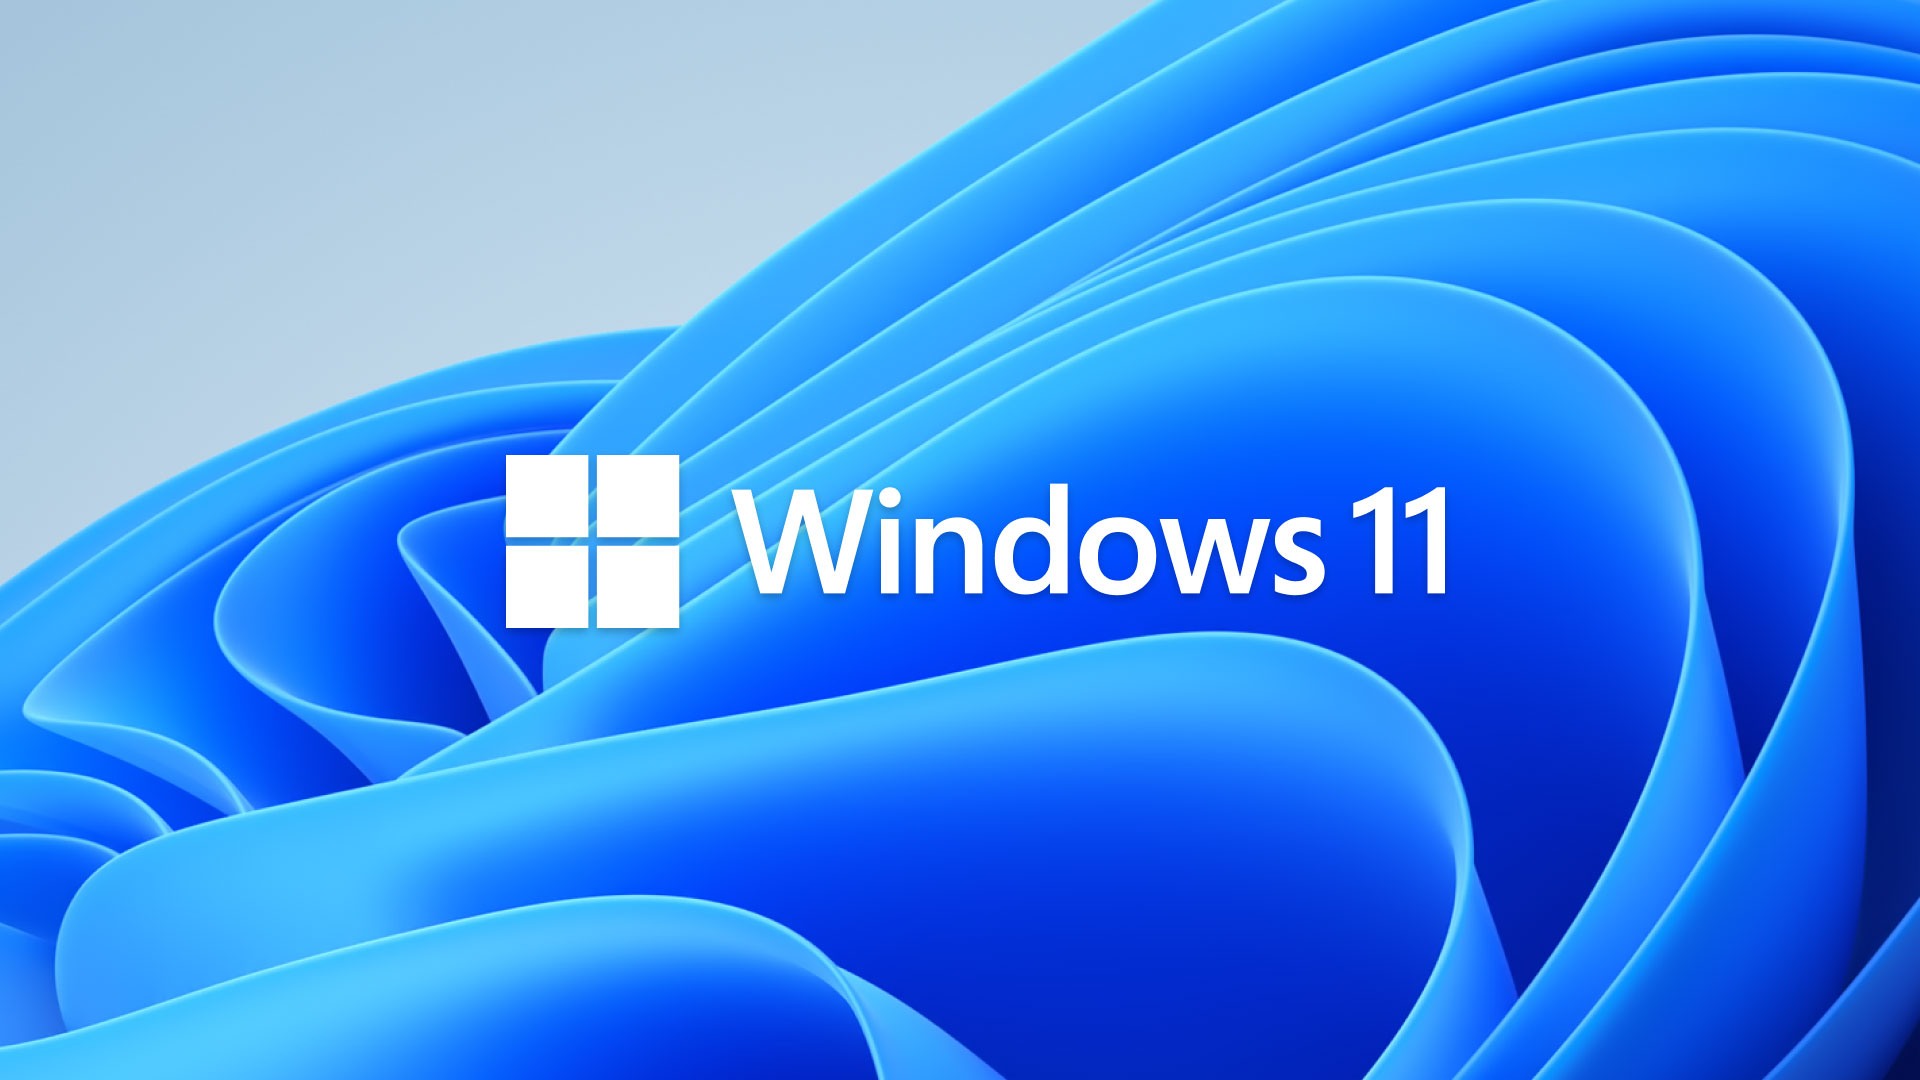 Microsoft celebrates Windows 11 upgrade as 